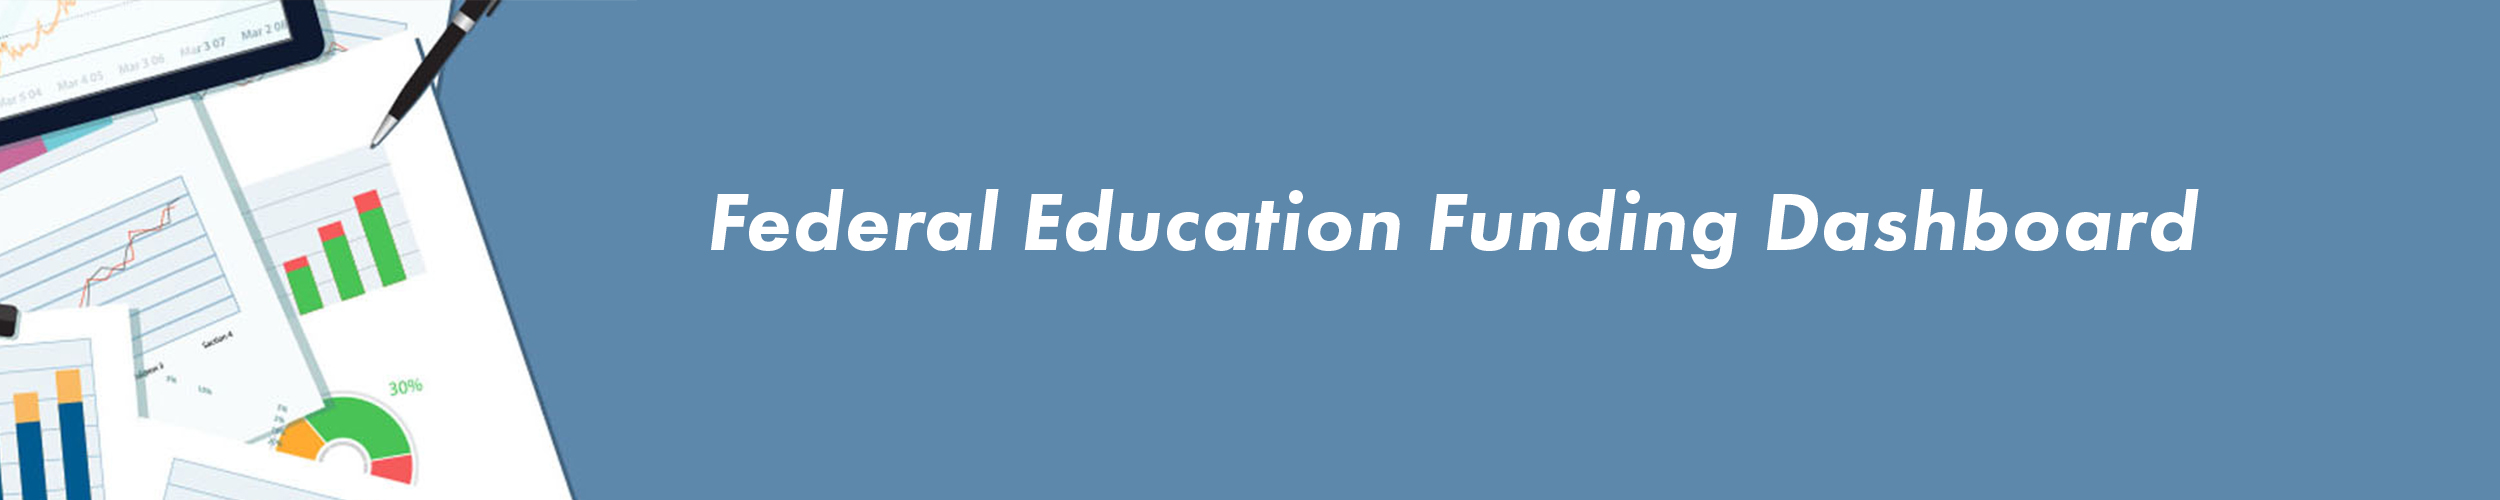 Federal Education Funding Dashboard. Link.